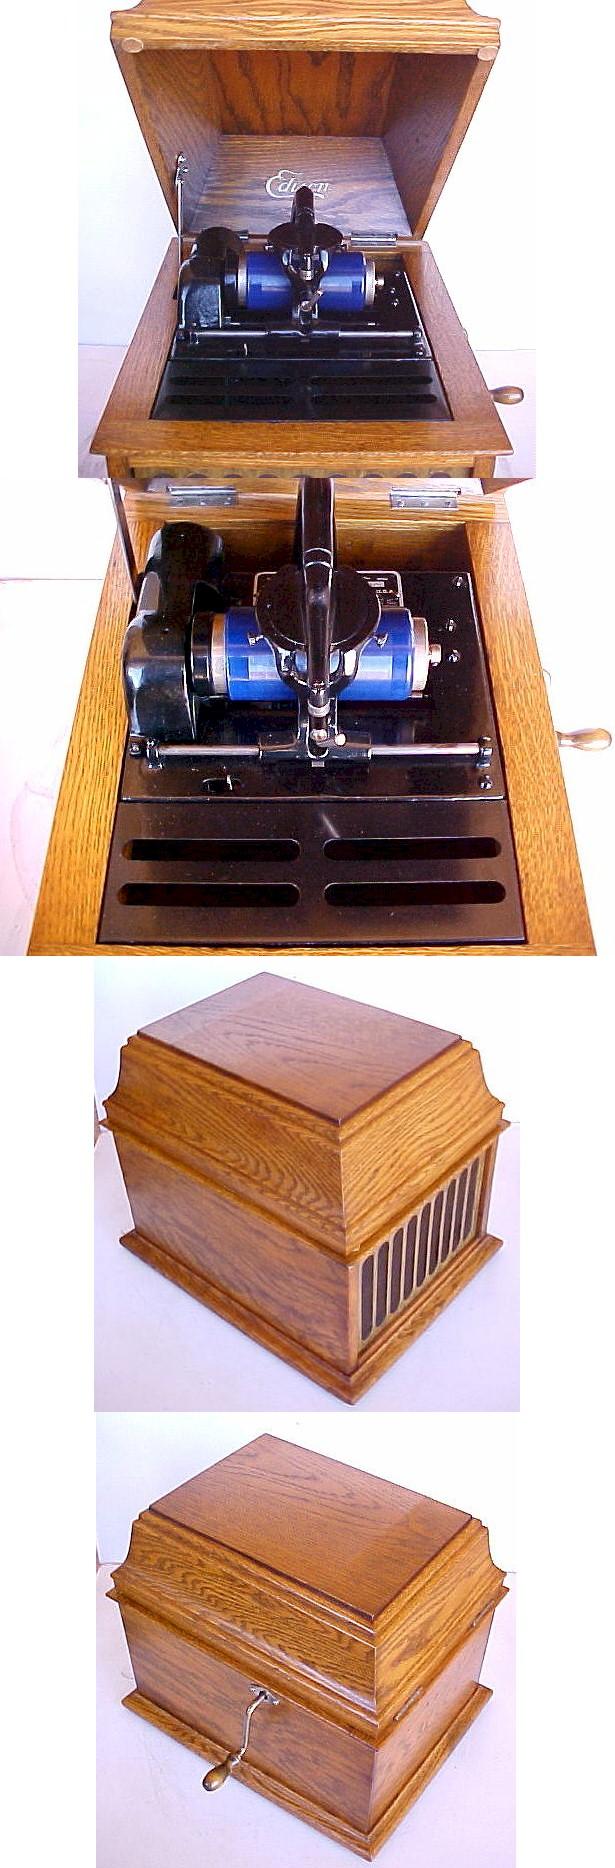 Edison Amberola 30 Cylinder Phonograph (1915)